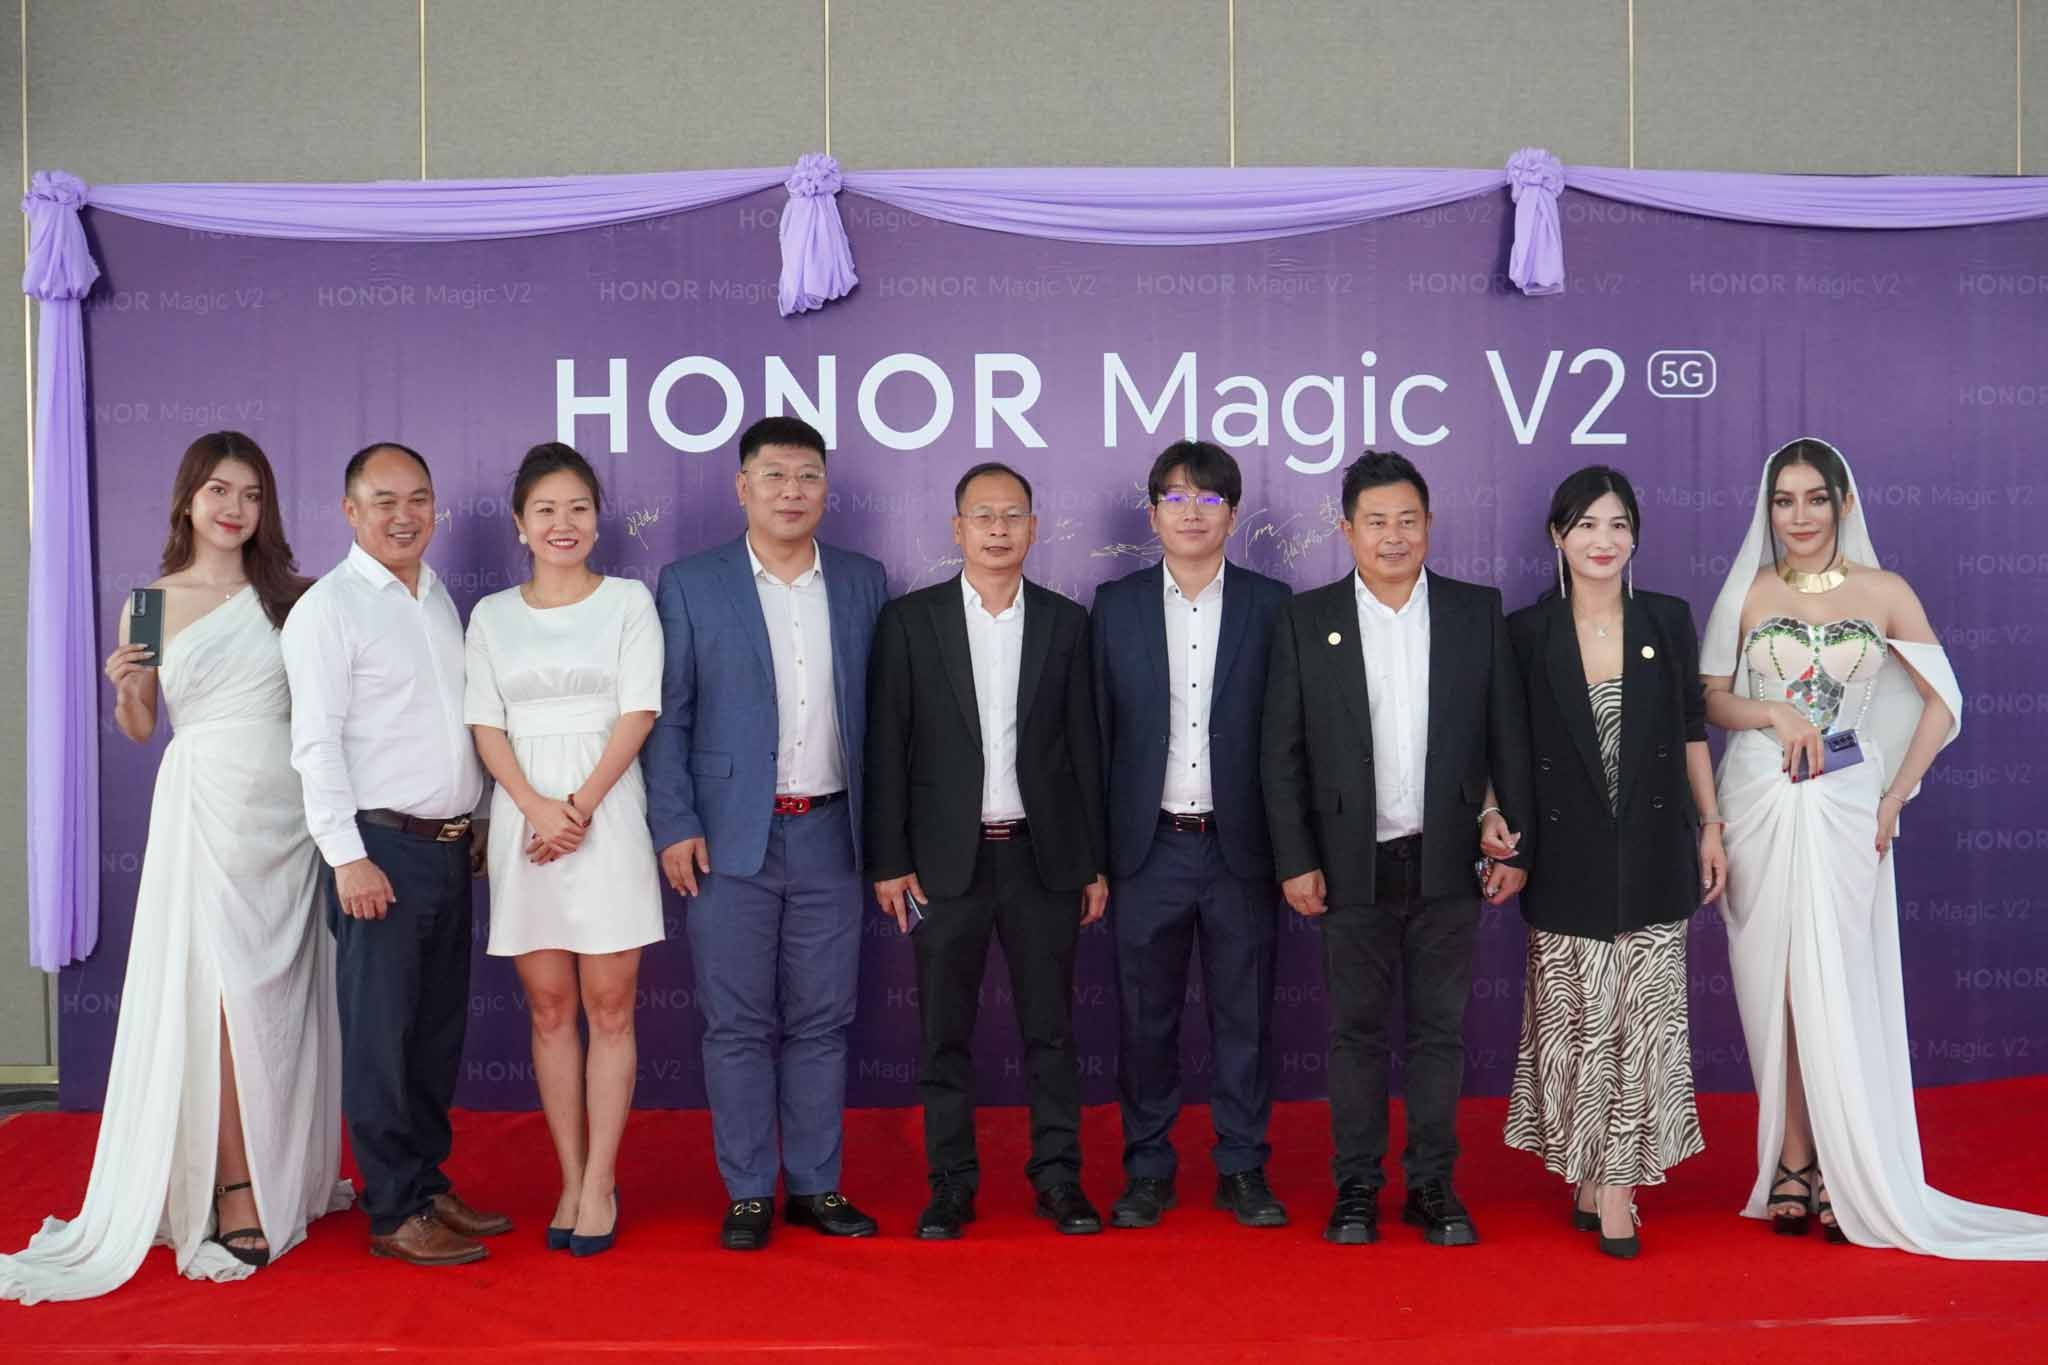 Honor Magic V2 Small Size 64